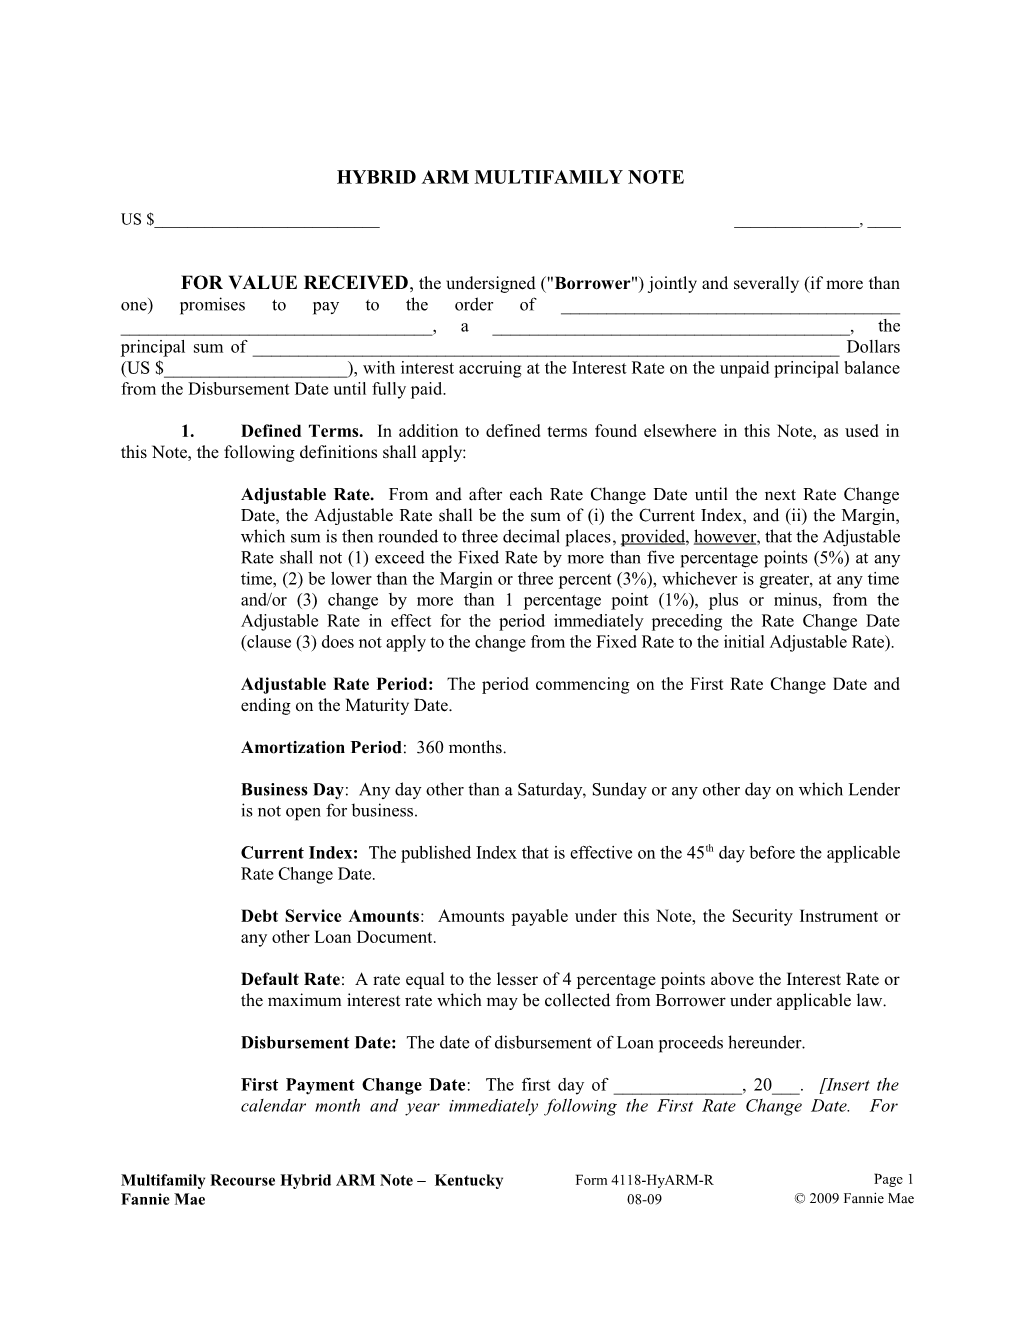 Multifamily Form 4118-Hyarm-R Kentucky